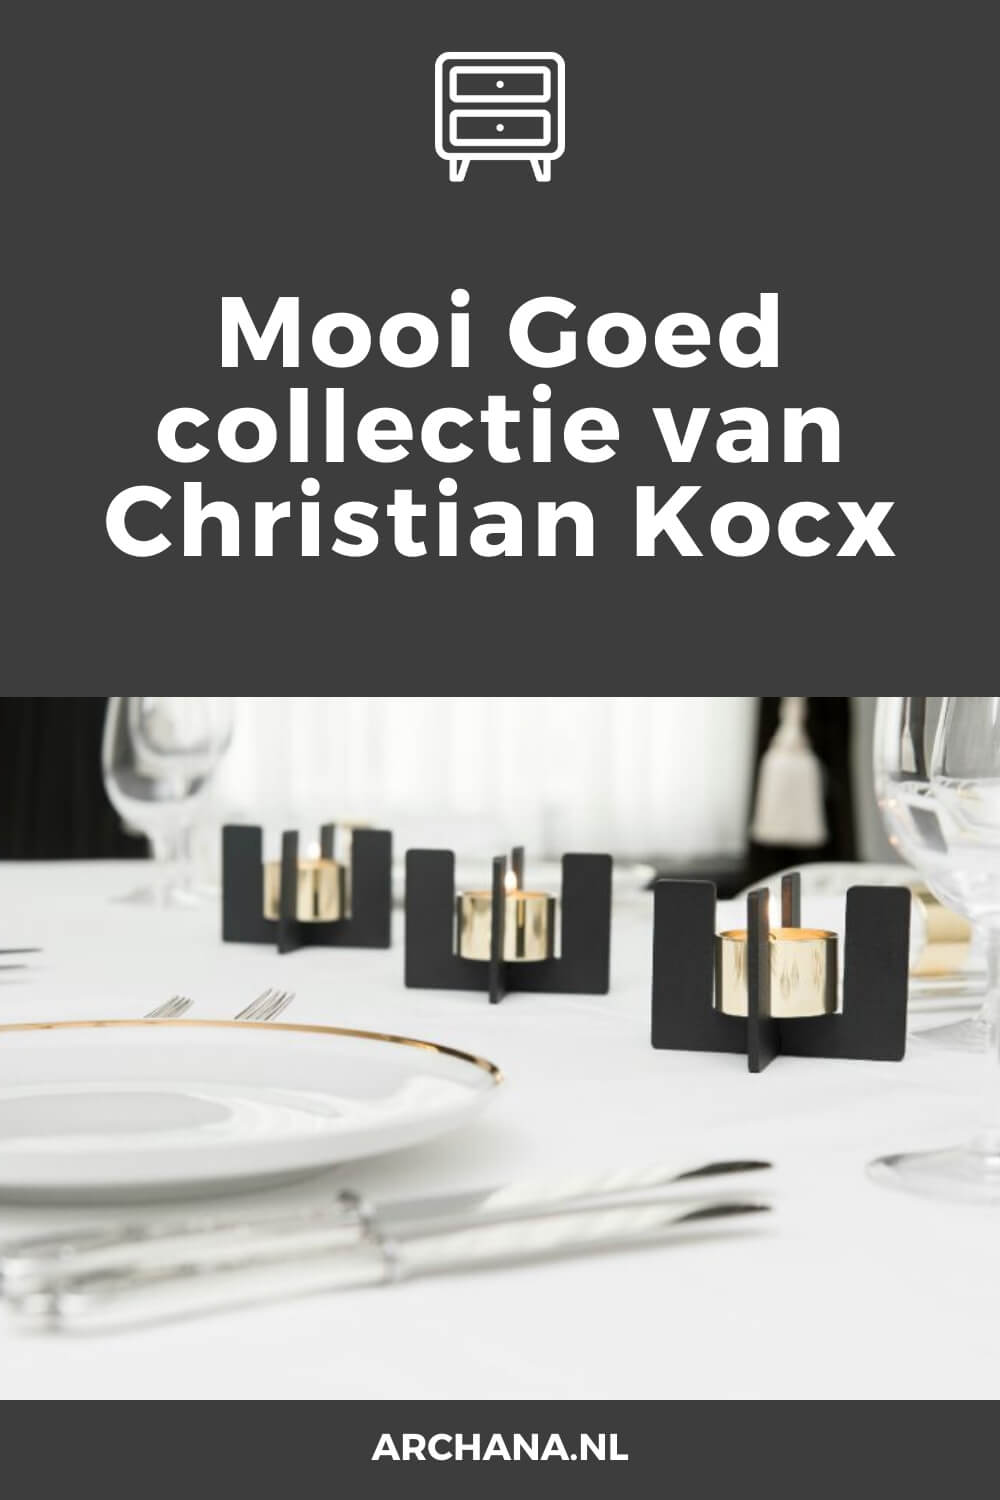 Mooi Goed collectie van Christian Kocx • Dutch Design - ARCHANA.NL #dutchdesign